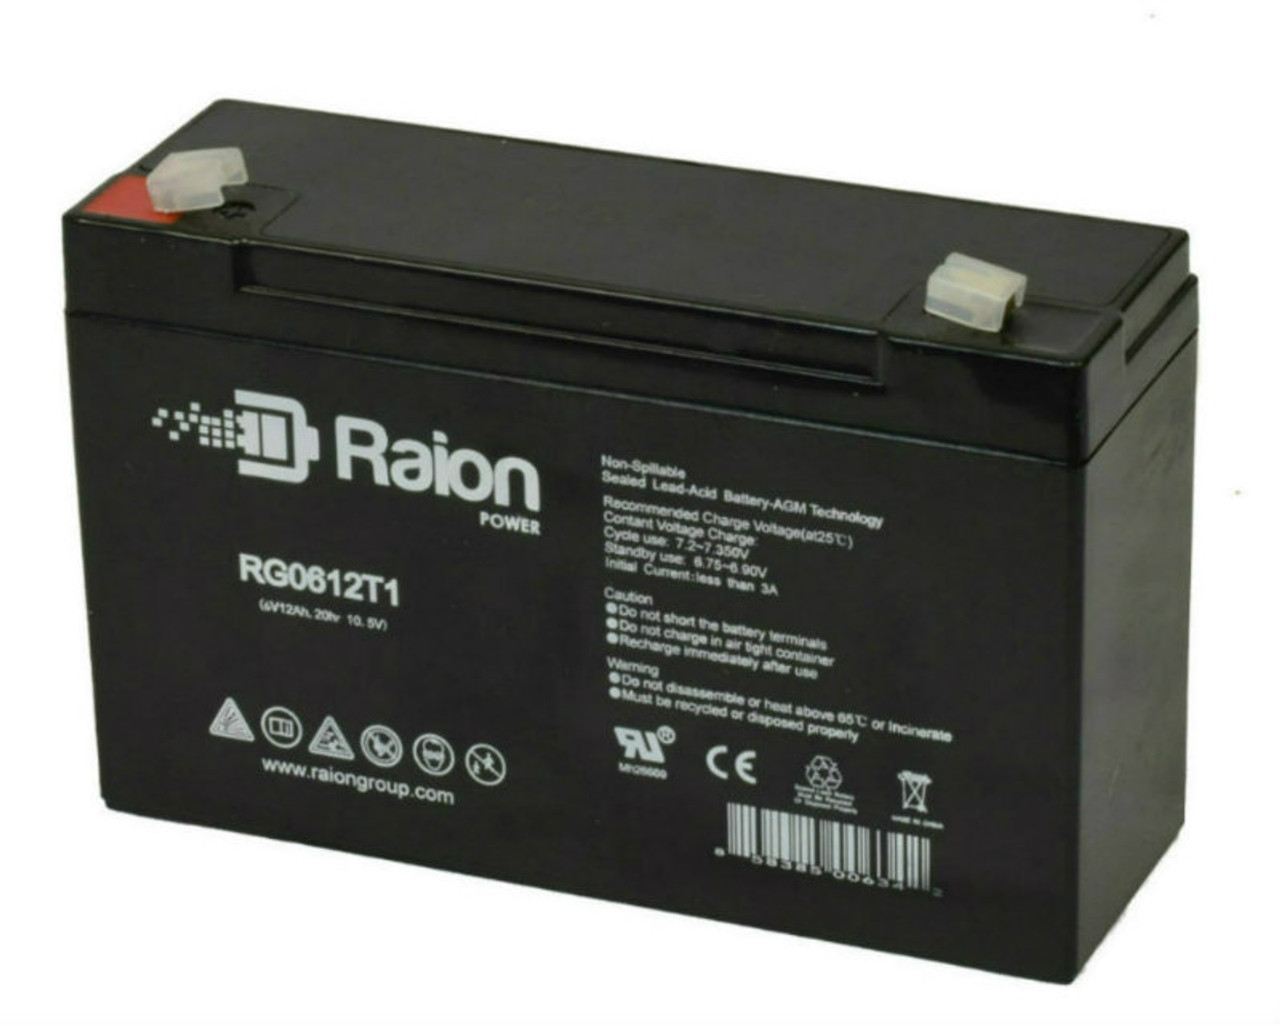 Raion Power RG06120T1 Replacement 6V 12Ah Emergency Light Battery for Elan 1661